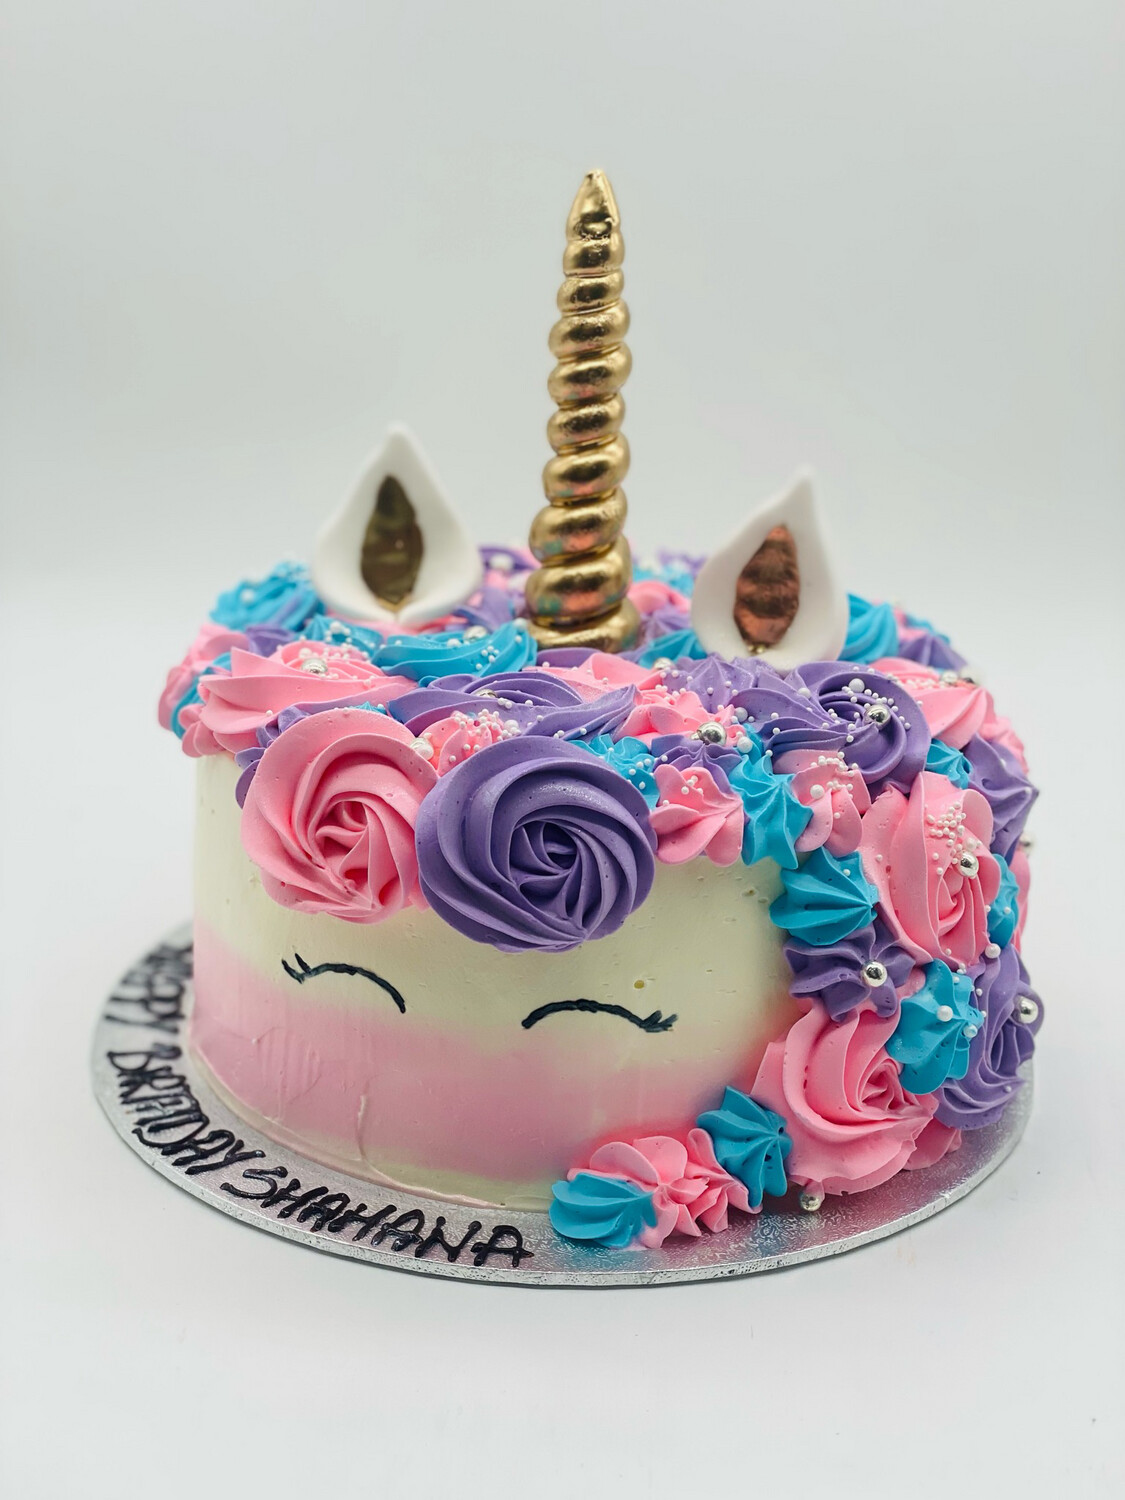 How to make a unicorn cake with whipped cream - YouTube